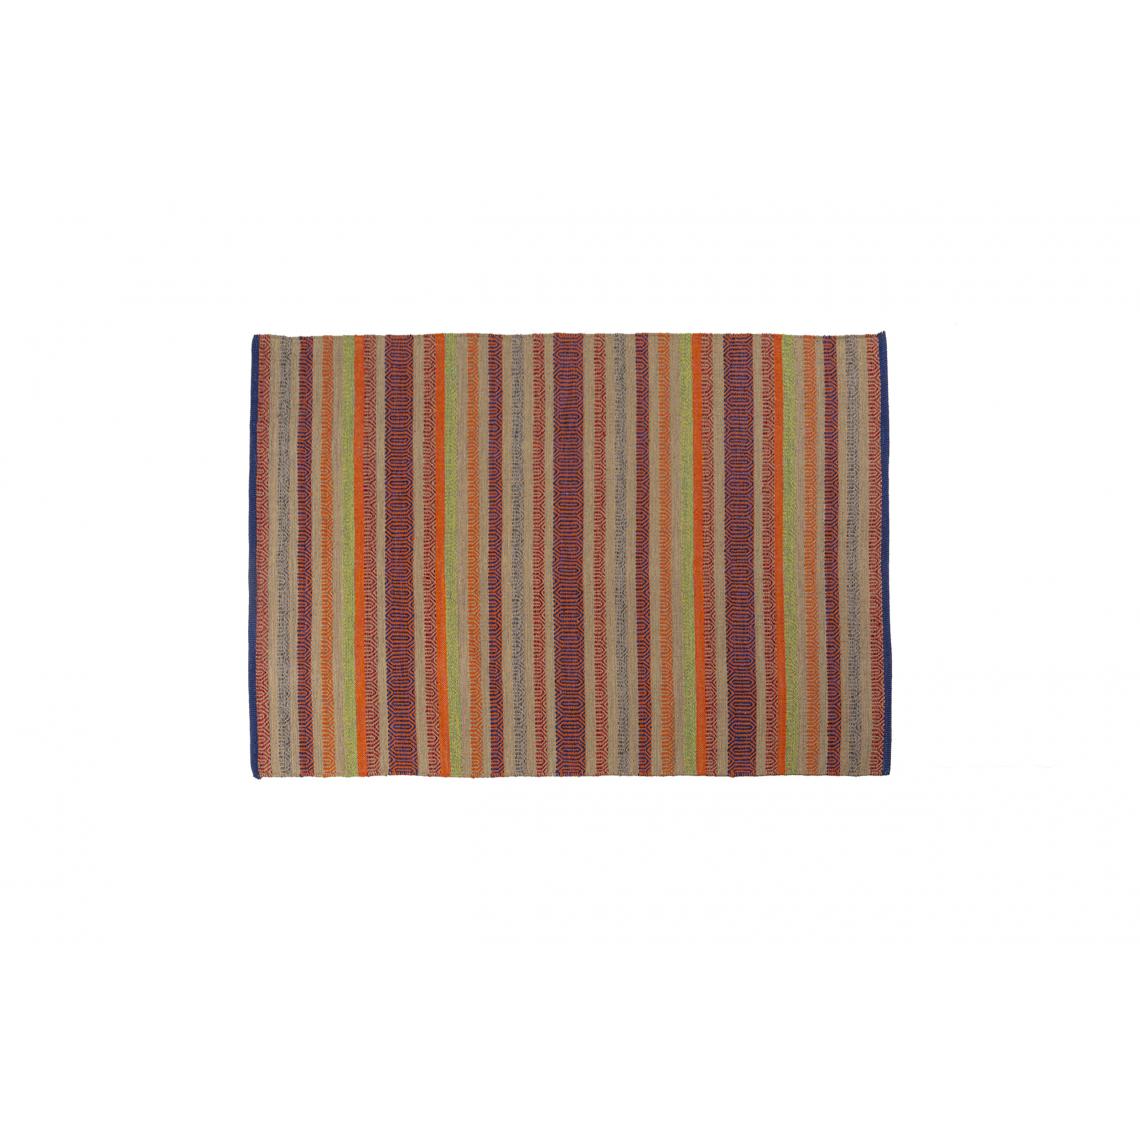 Alter - Tapis moderne Cleveland, style kilim, 100% coton, multicolore, 230x160cm - Tapis